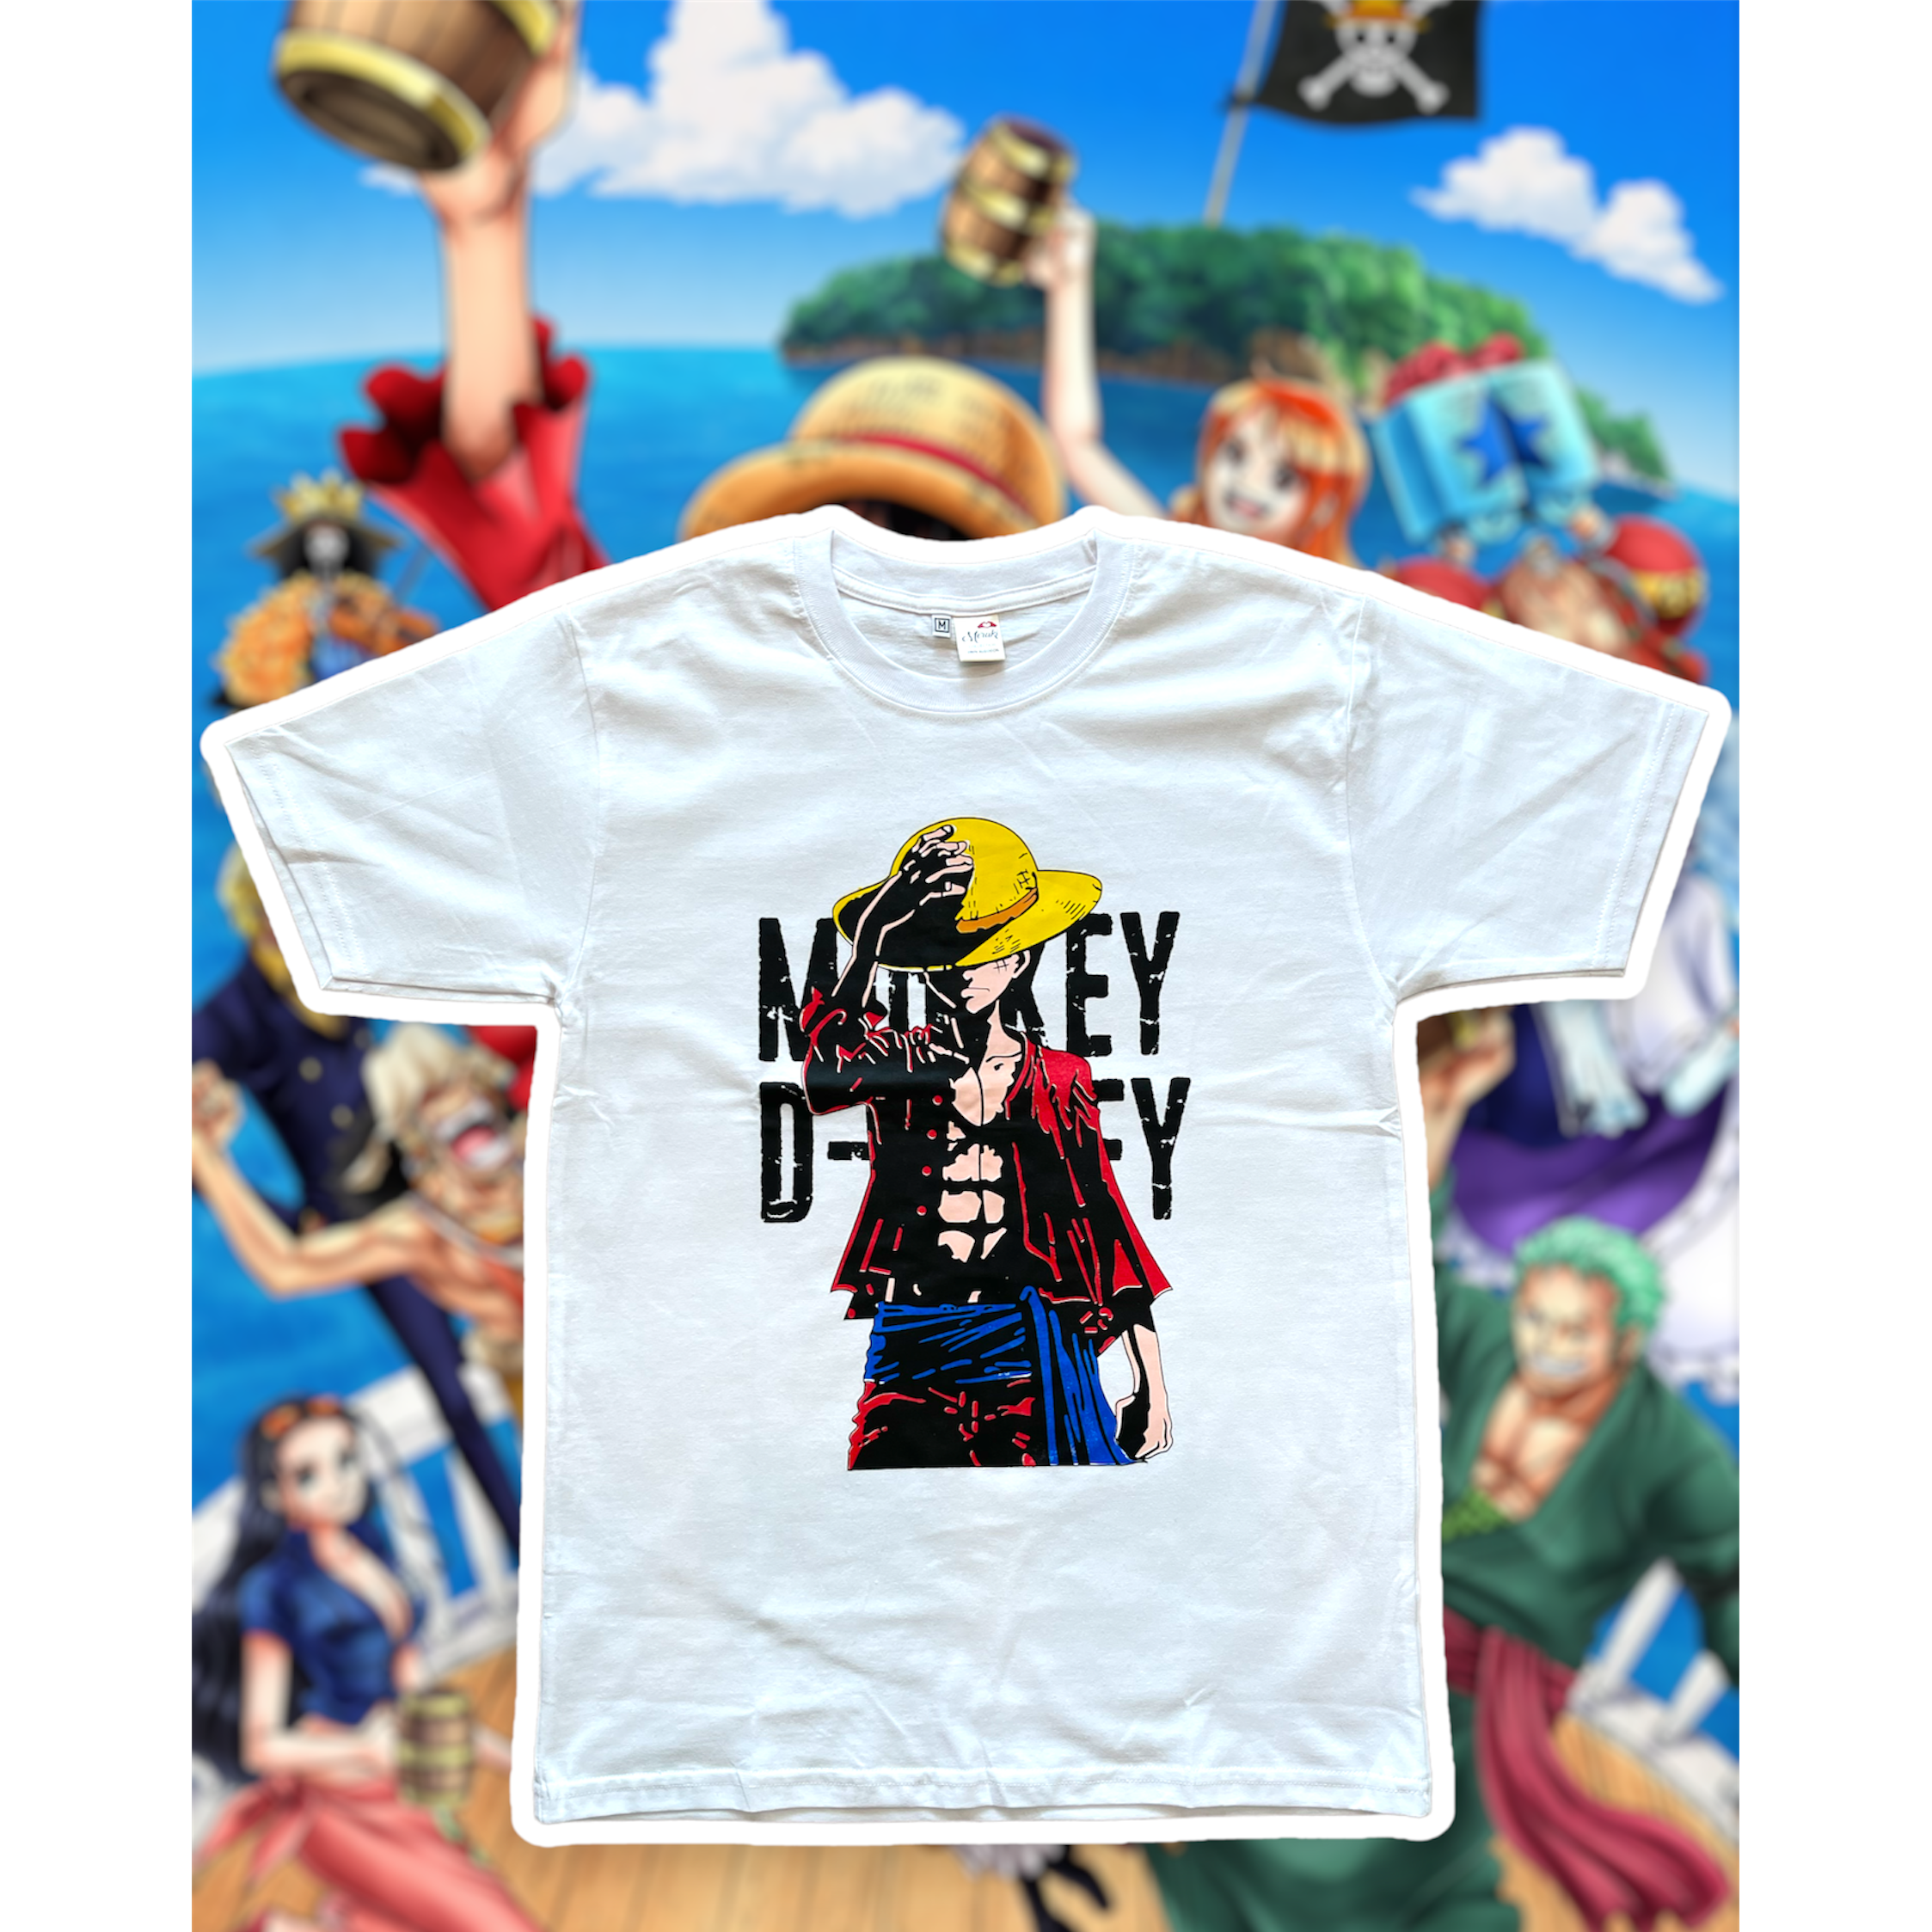 T-shirt modelo One Piece talla M